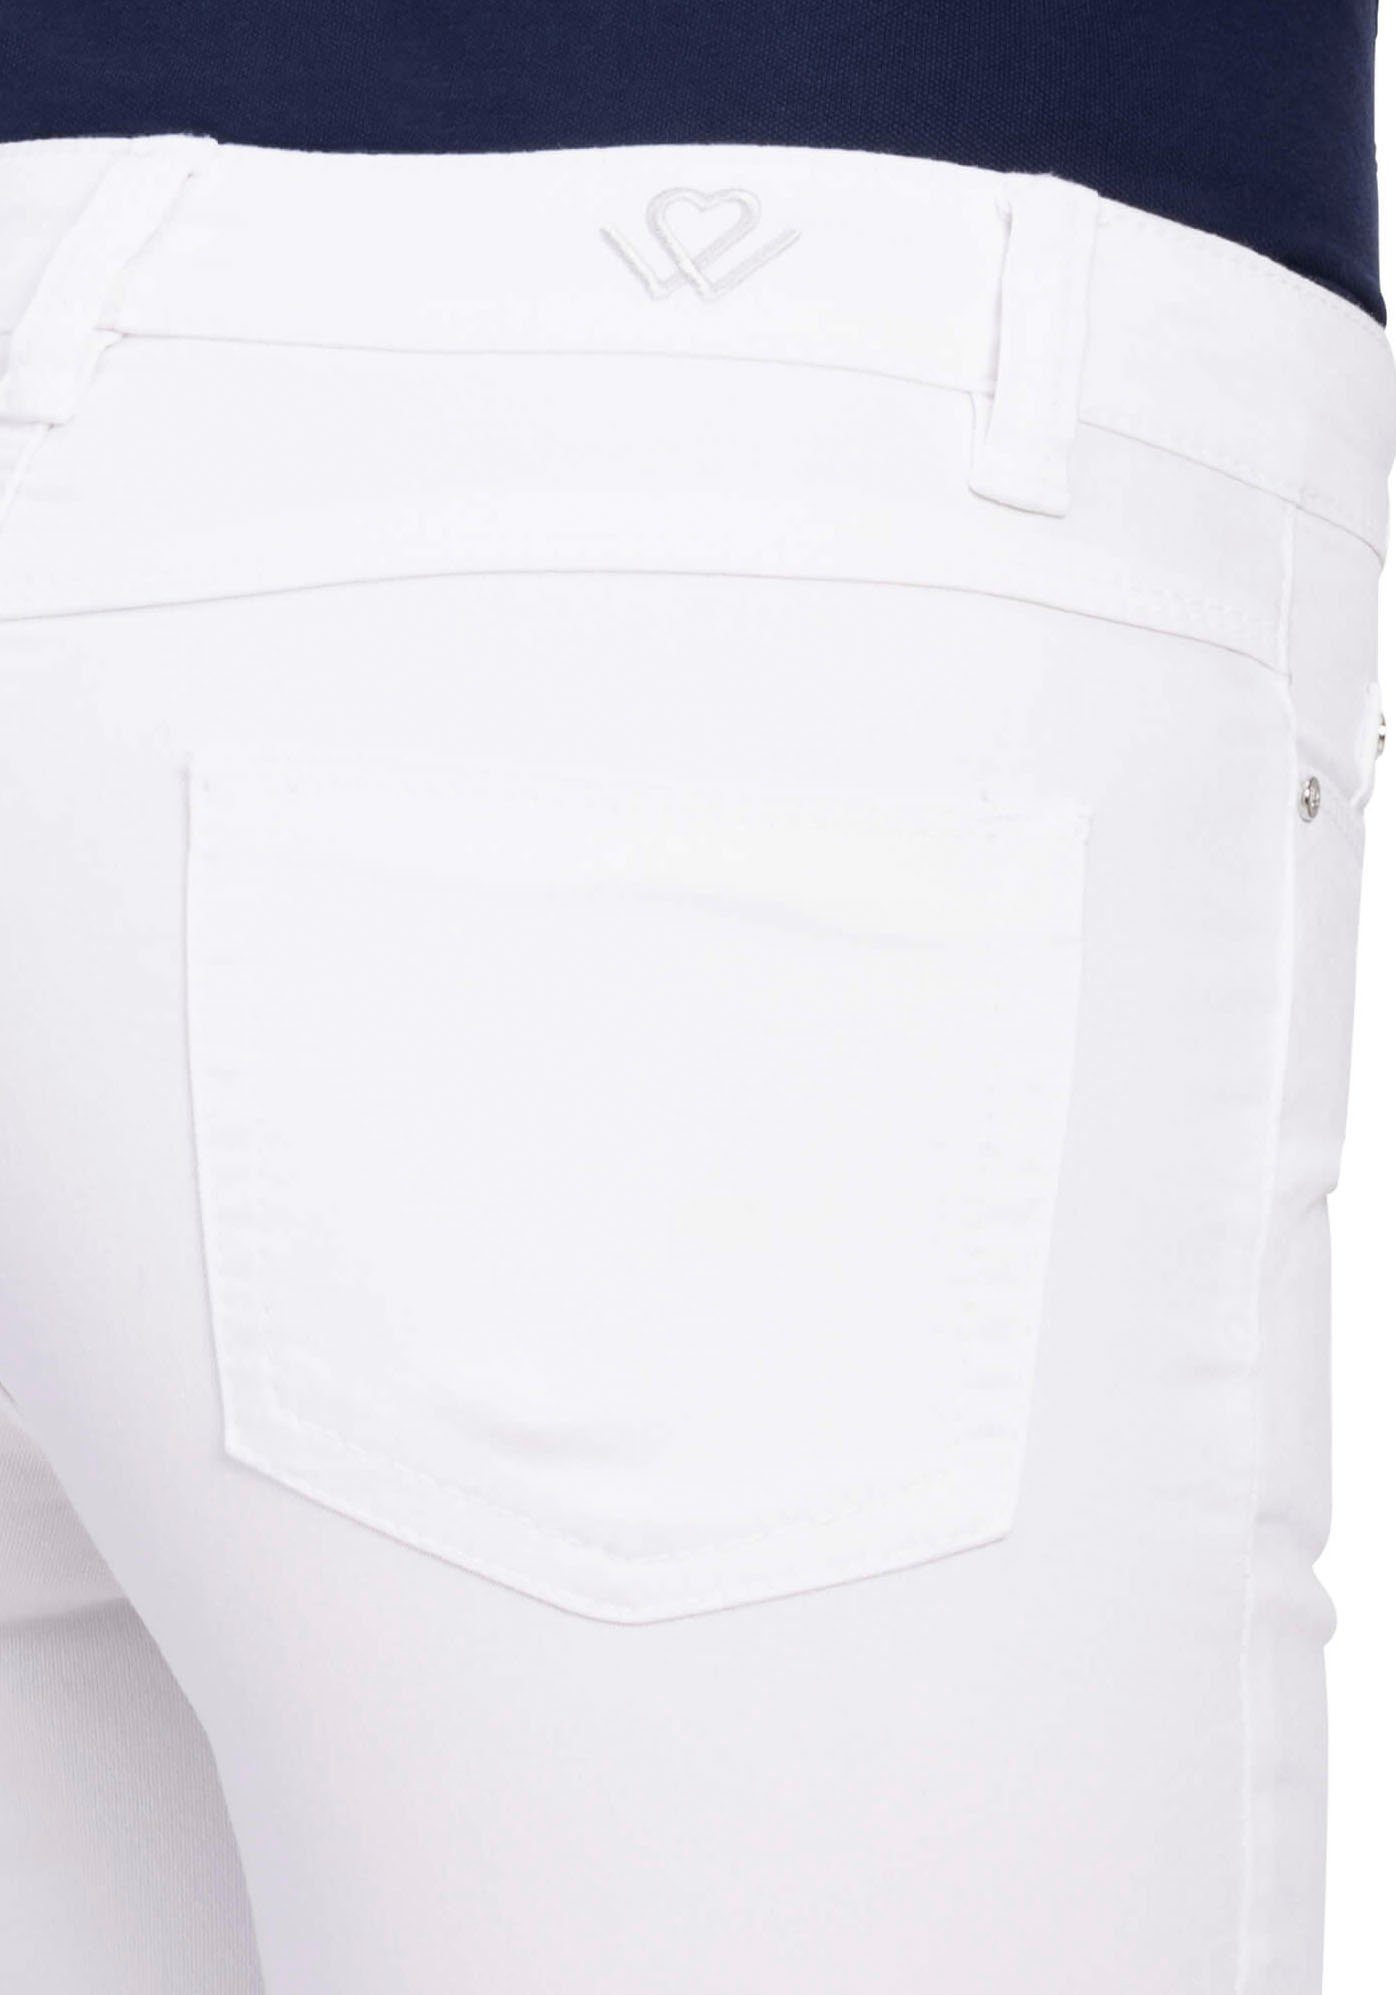 Klassischer Slim-fit-Jeans Schnitt white Classic-Slim wonderjeans gerader denim